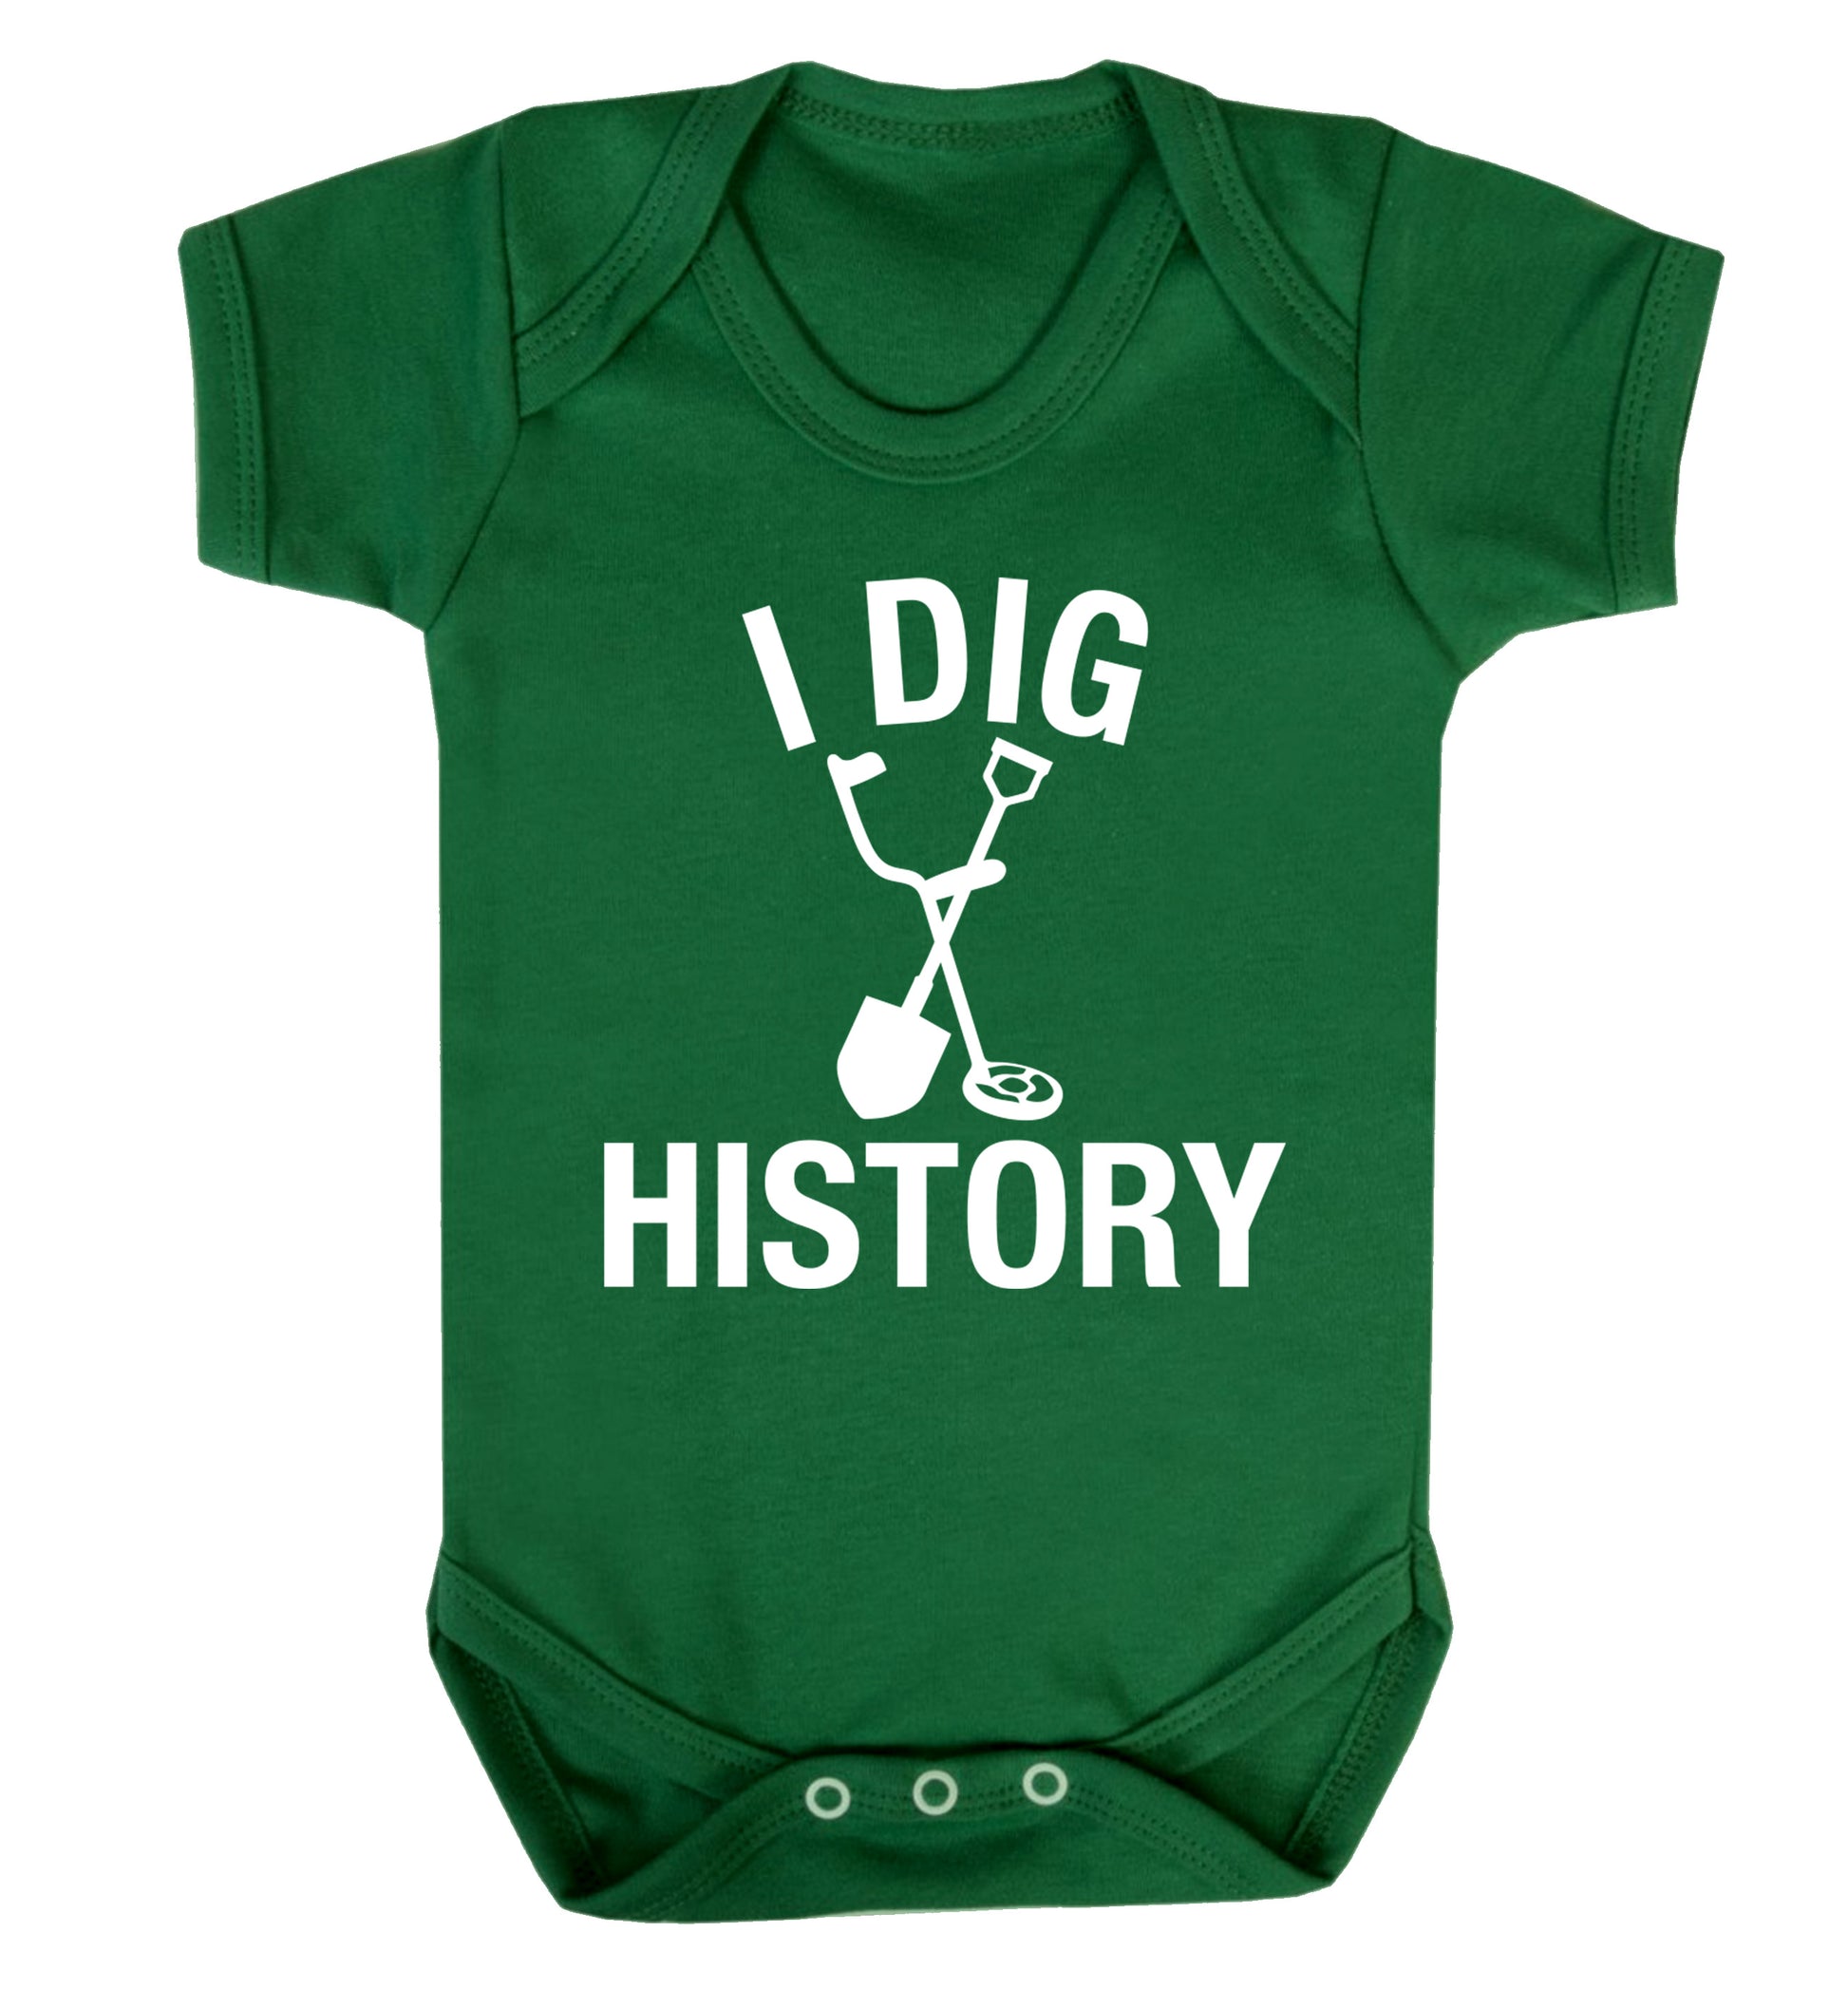 I dig history Baby Vest green 18-24 months